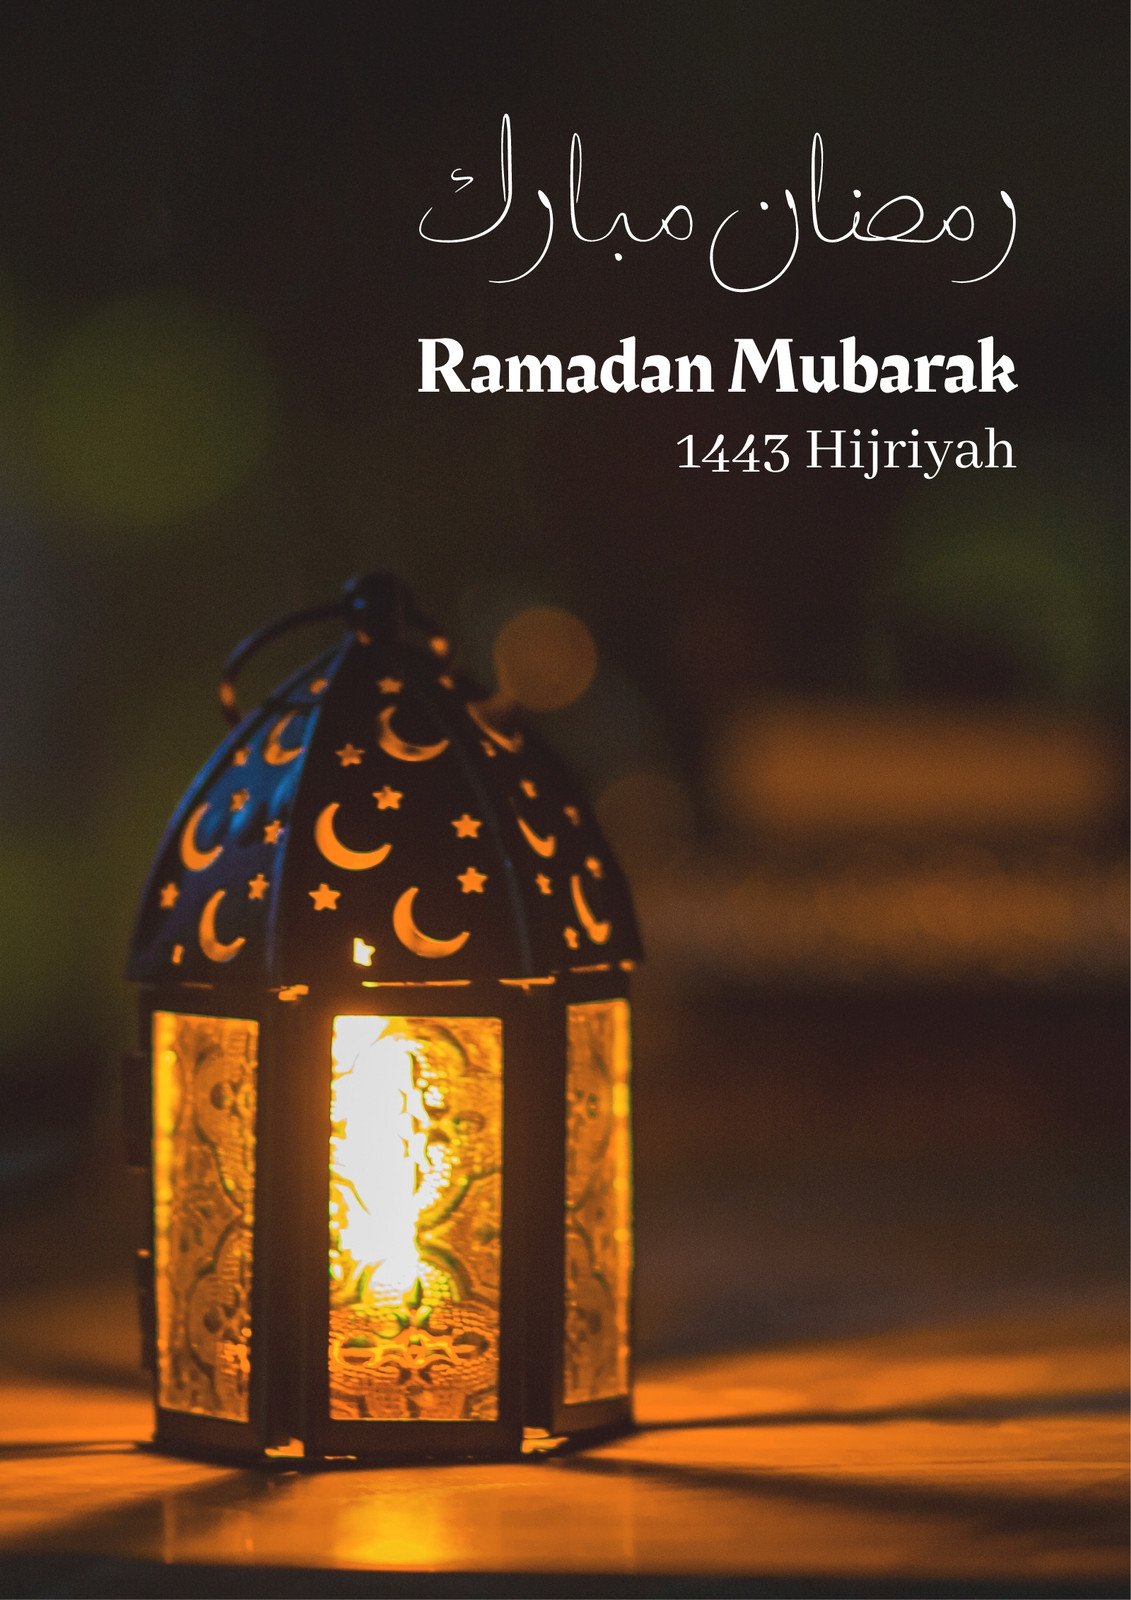 Free and customizable ramadan mubarak templates